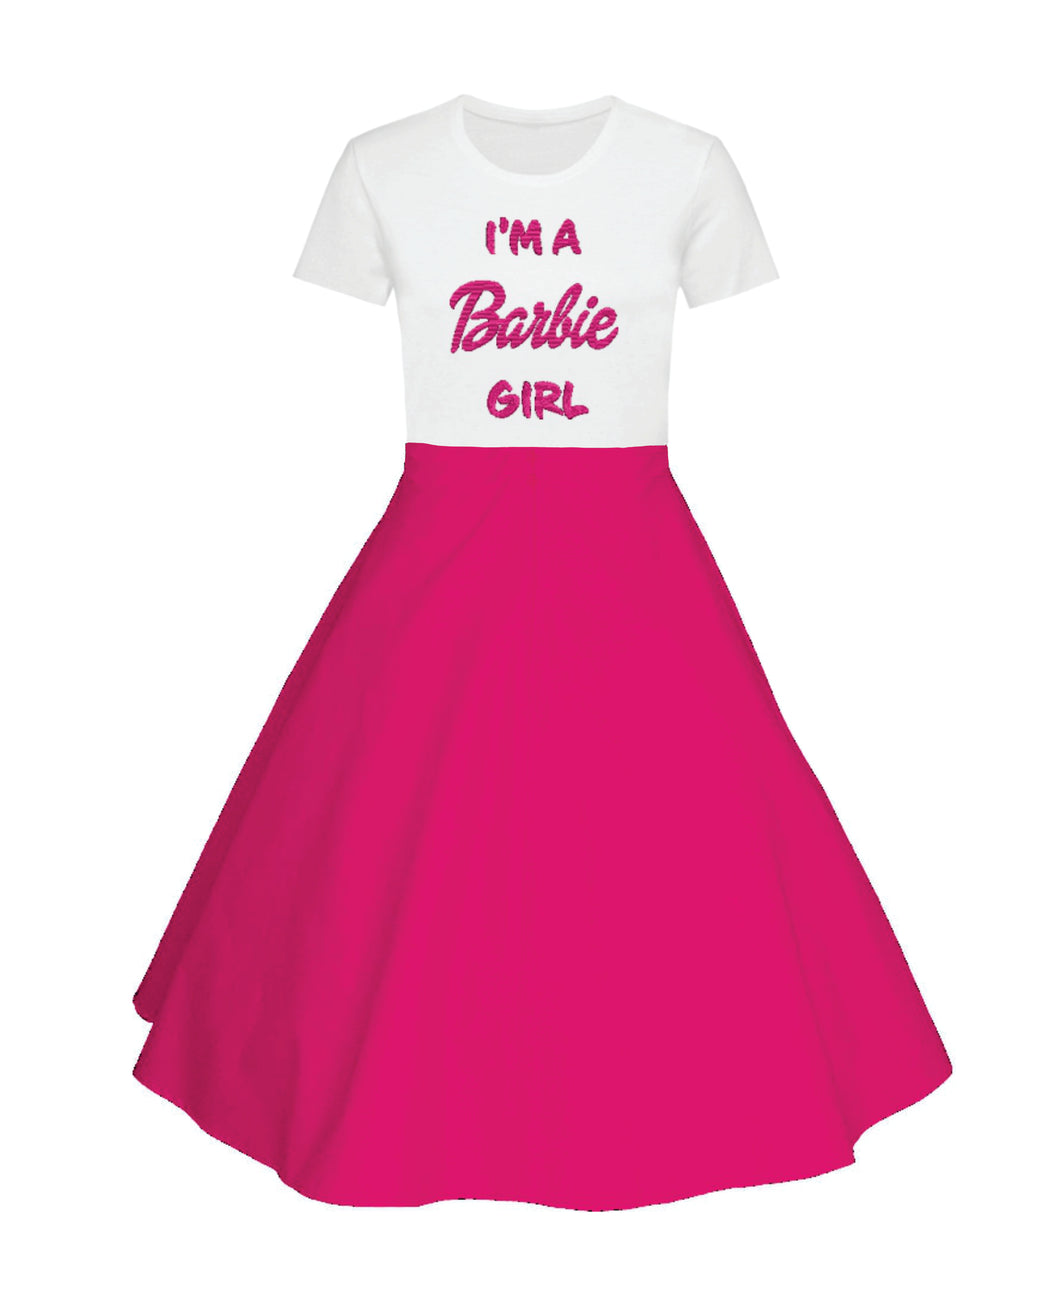 I'm a Barbie Girl Tshirt